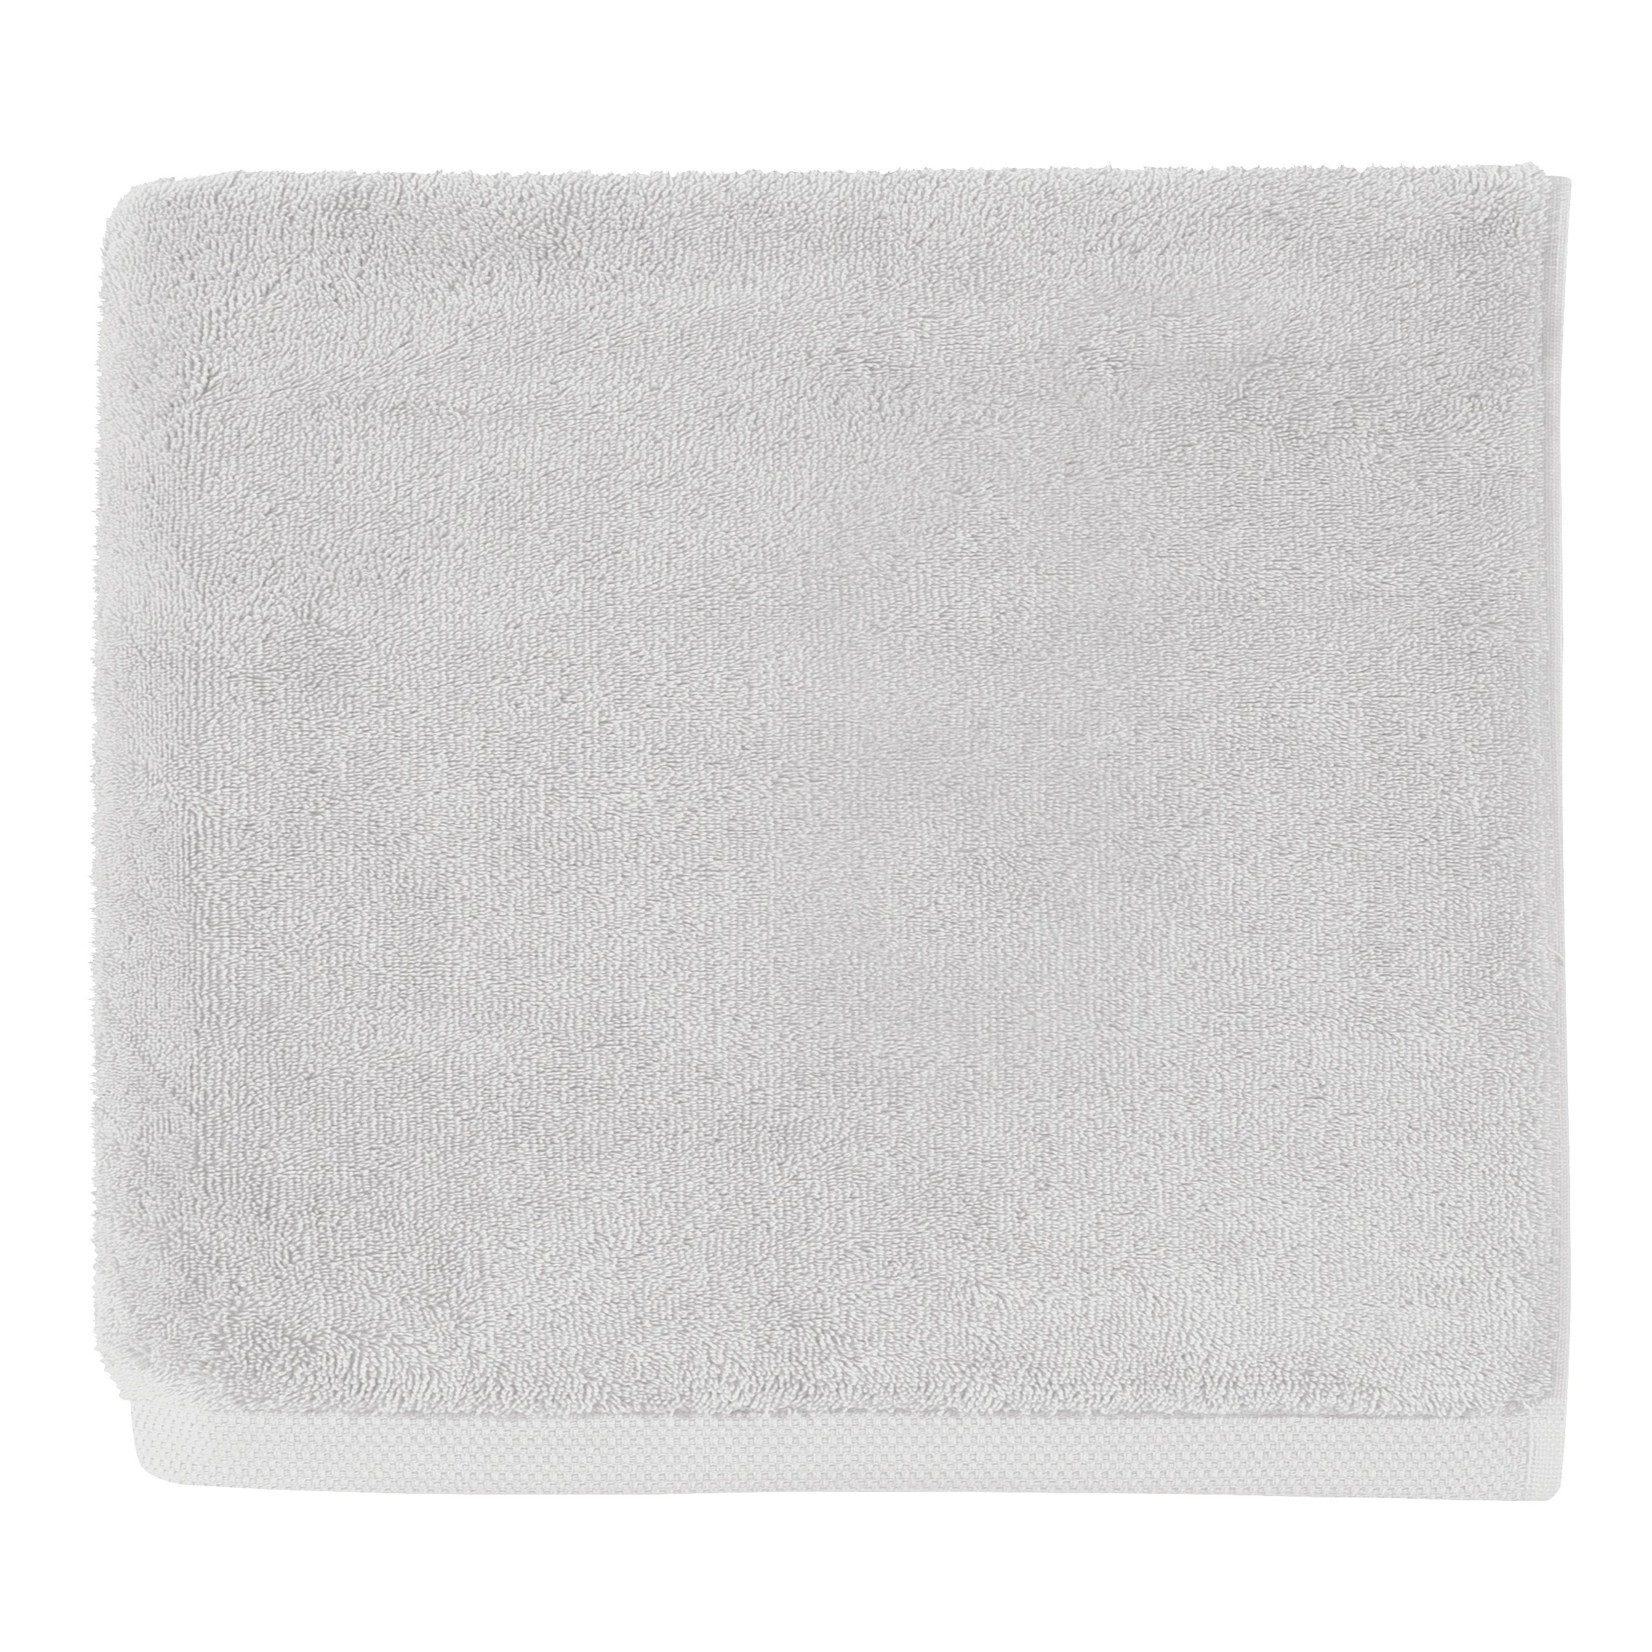 Essentiel - Light Grey Bath Towel